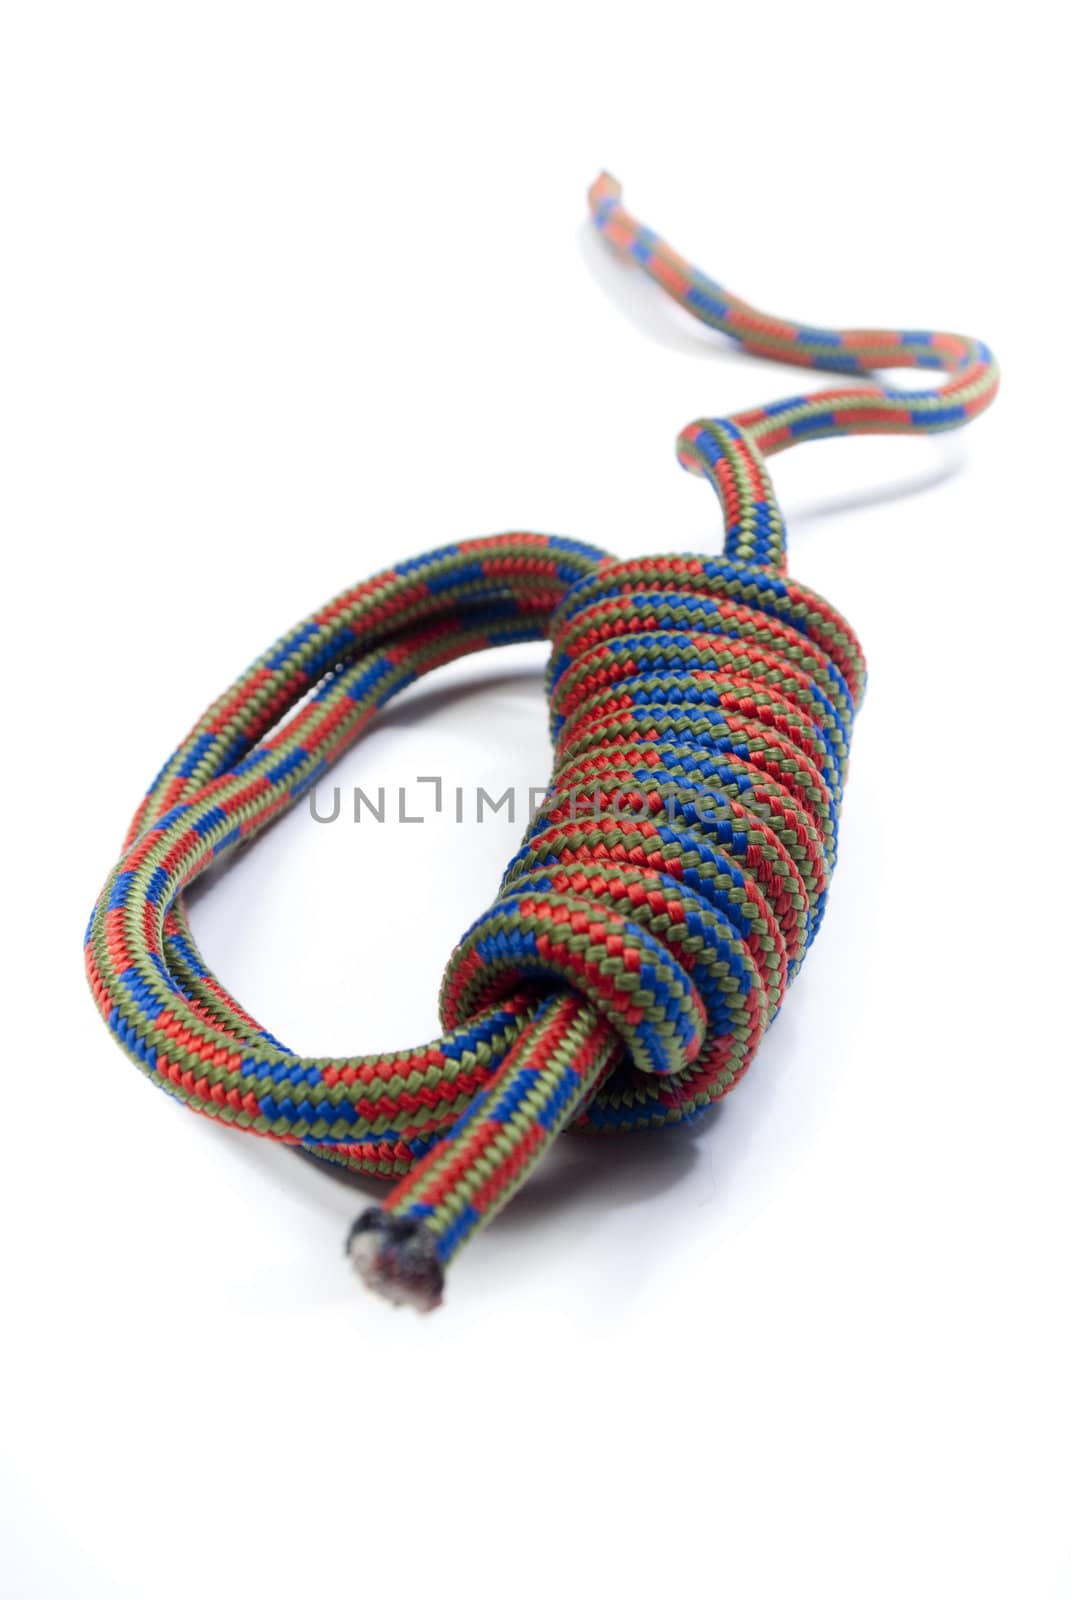 coloured rope bundled up